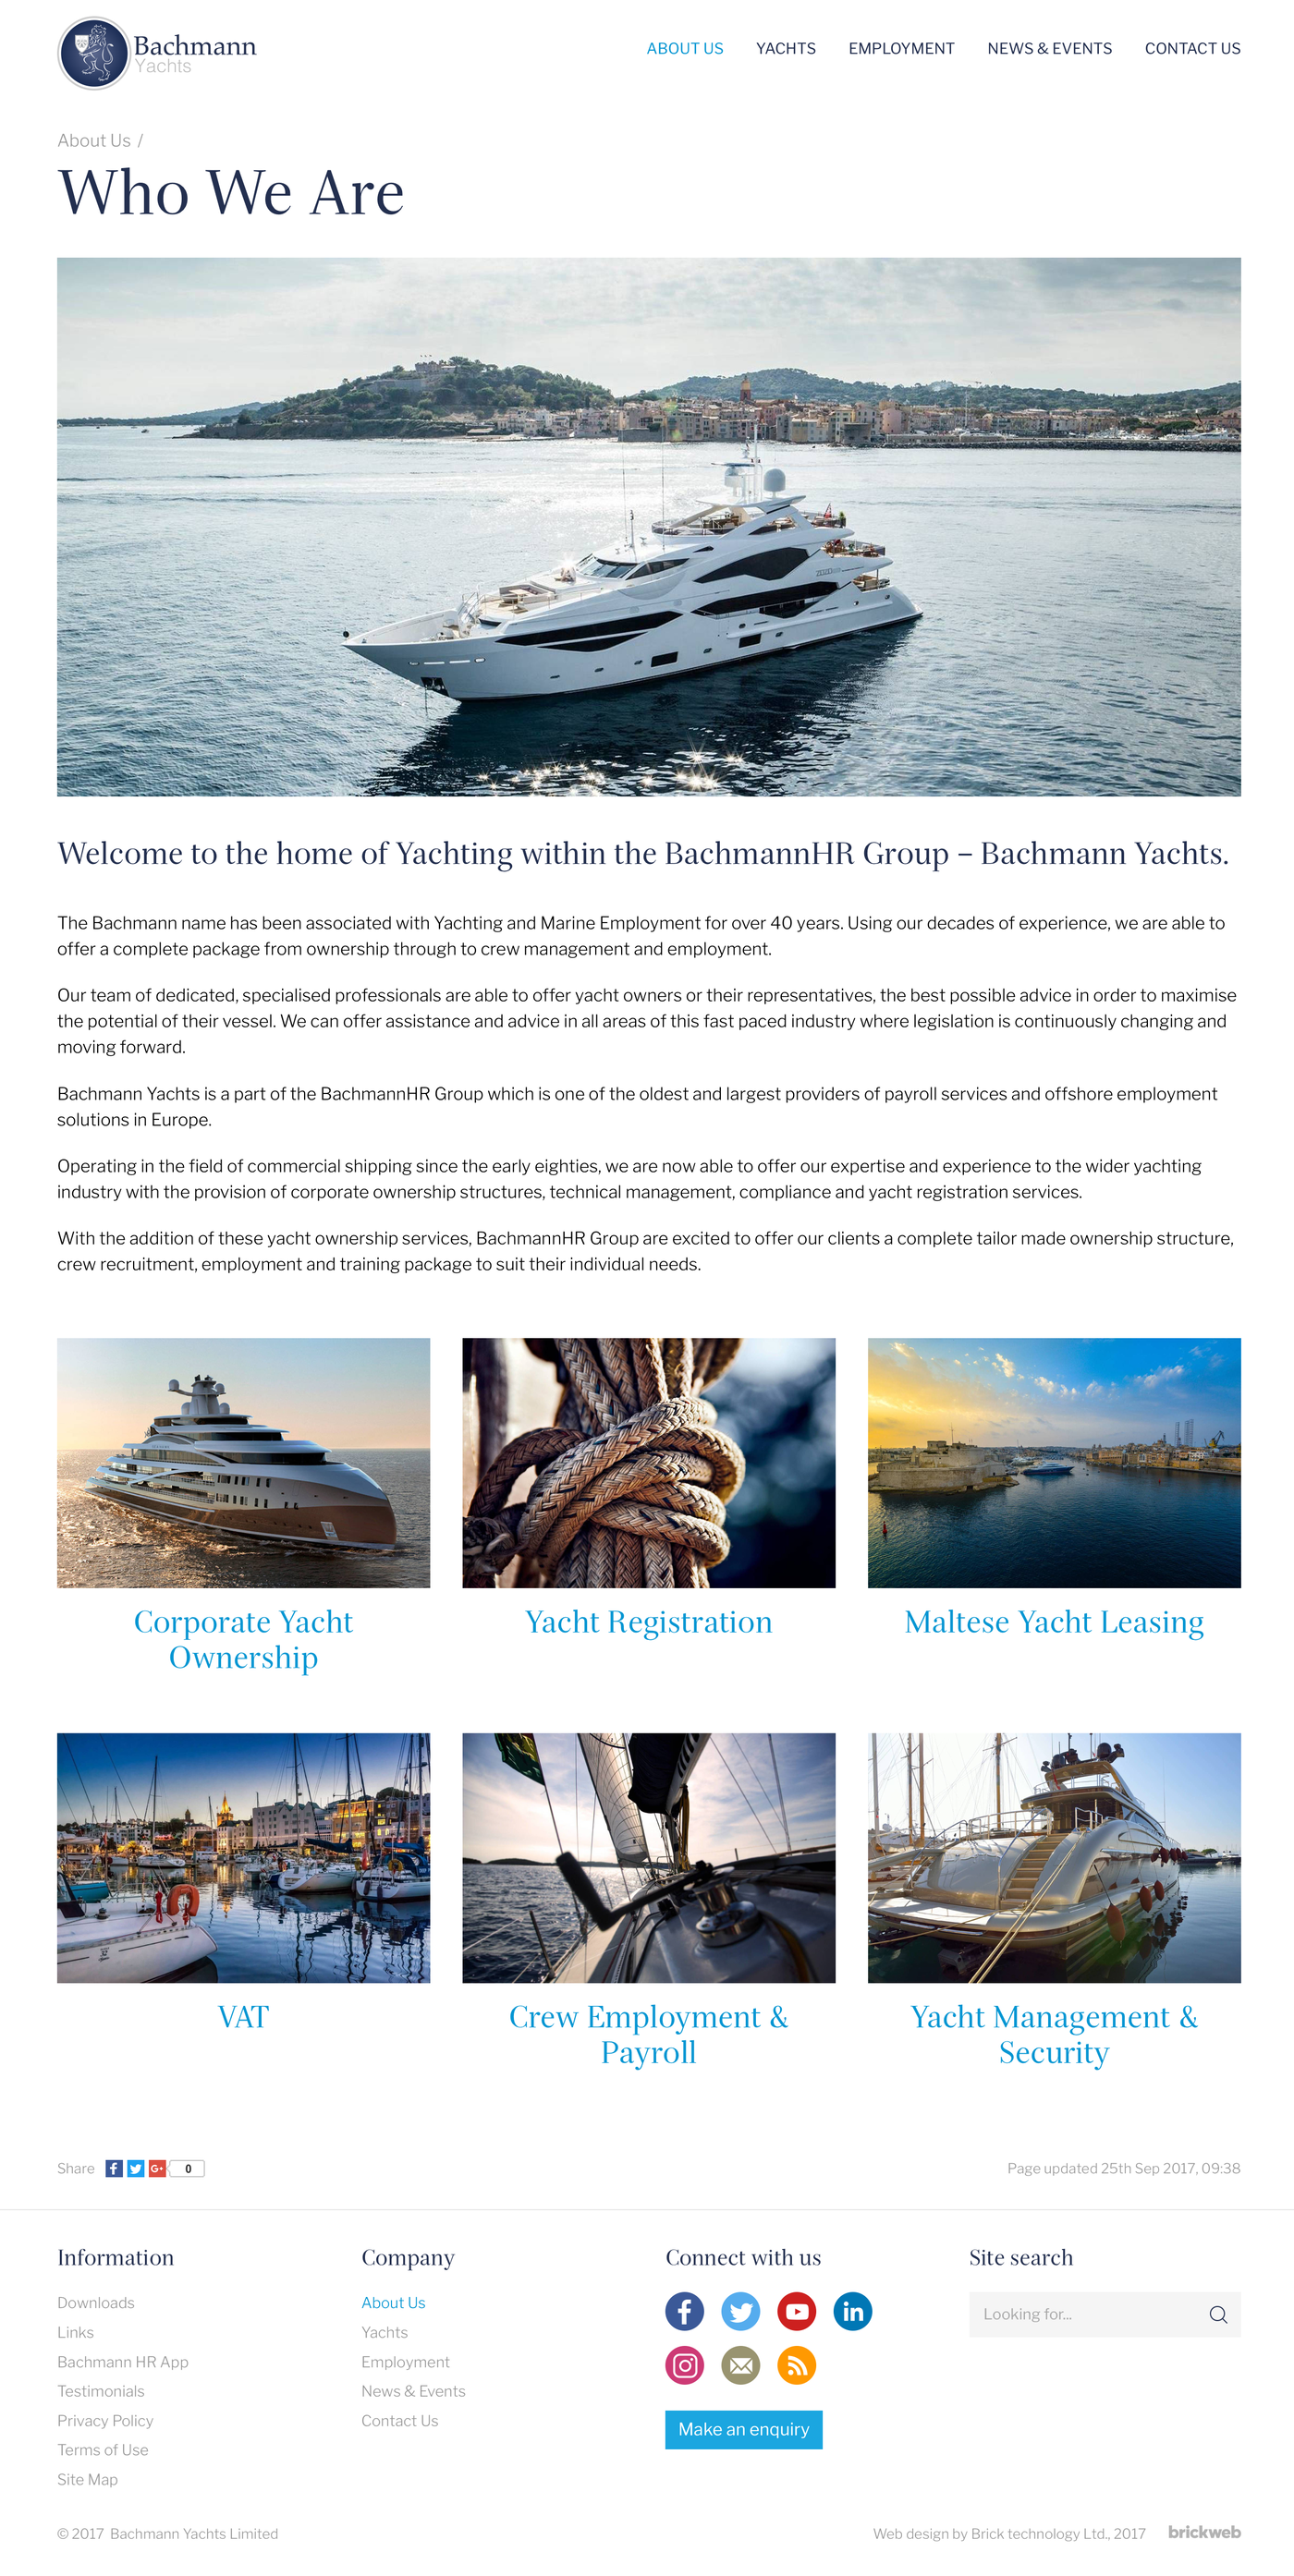 Bachmann Yachts Category